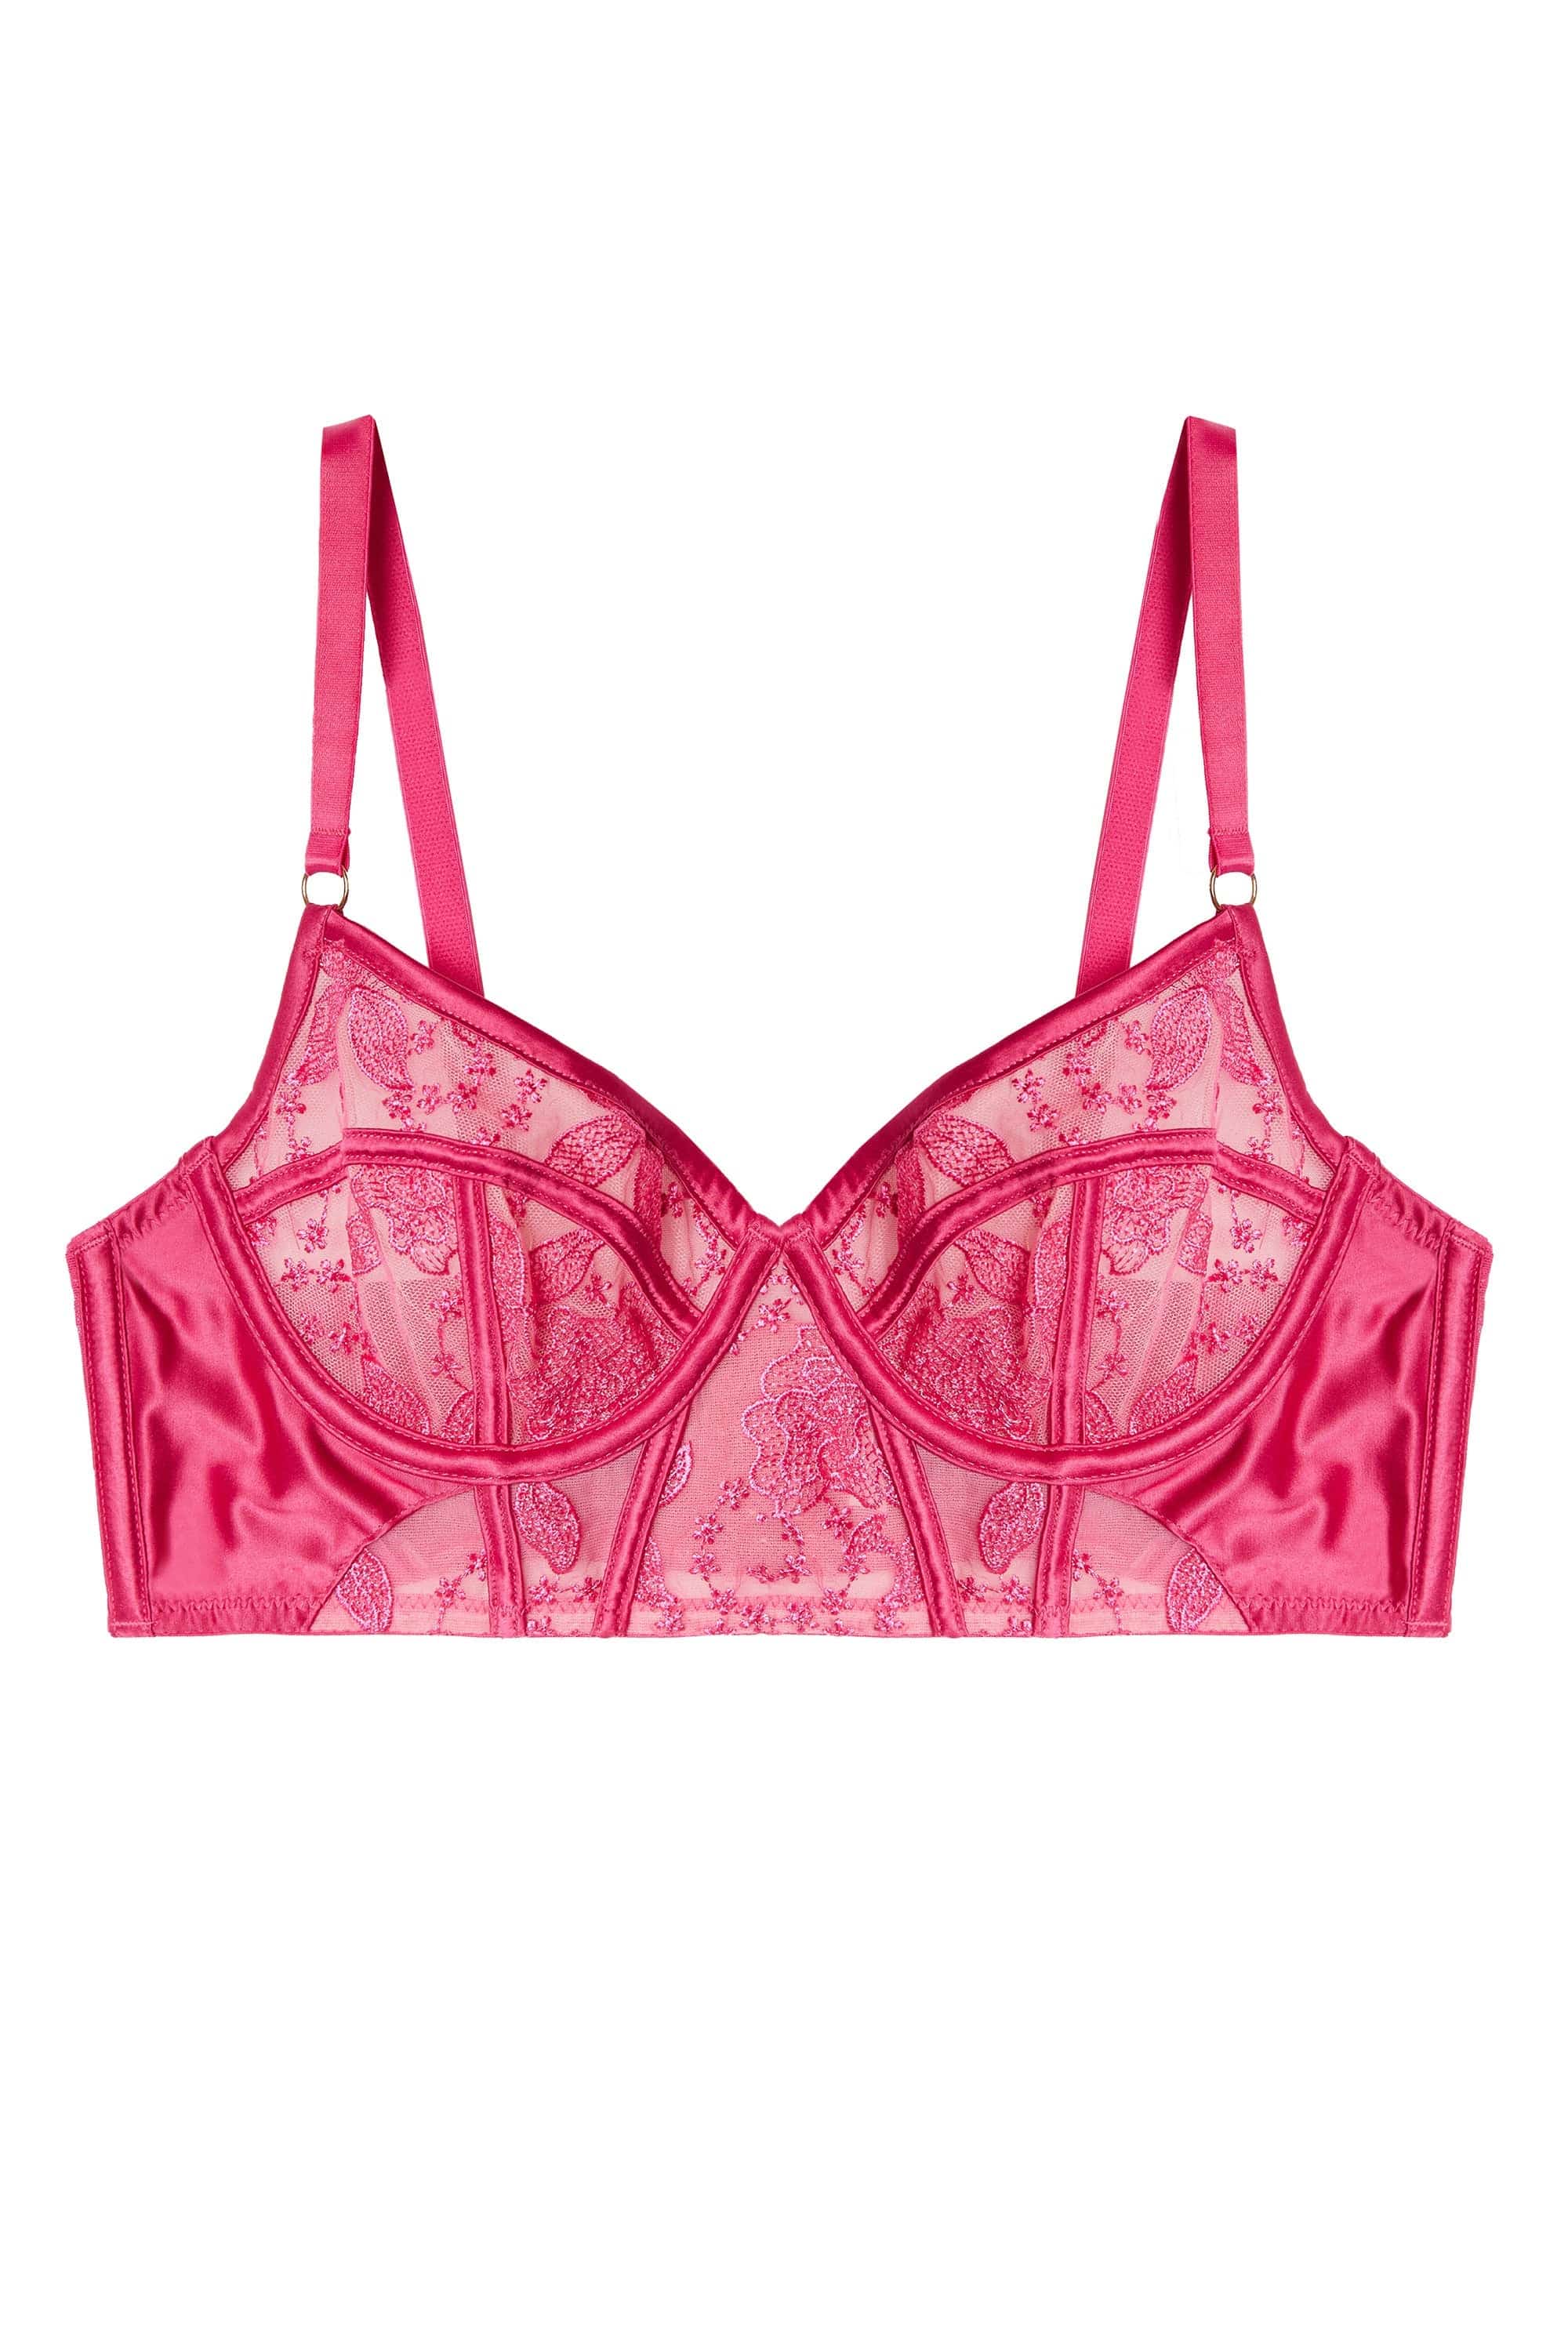 💗Flirtitude Hot Pink Bra💗  Hot pink bra, Pink bra, Hot pink